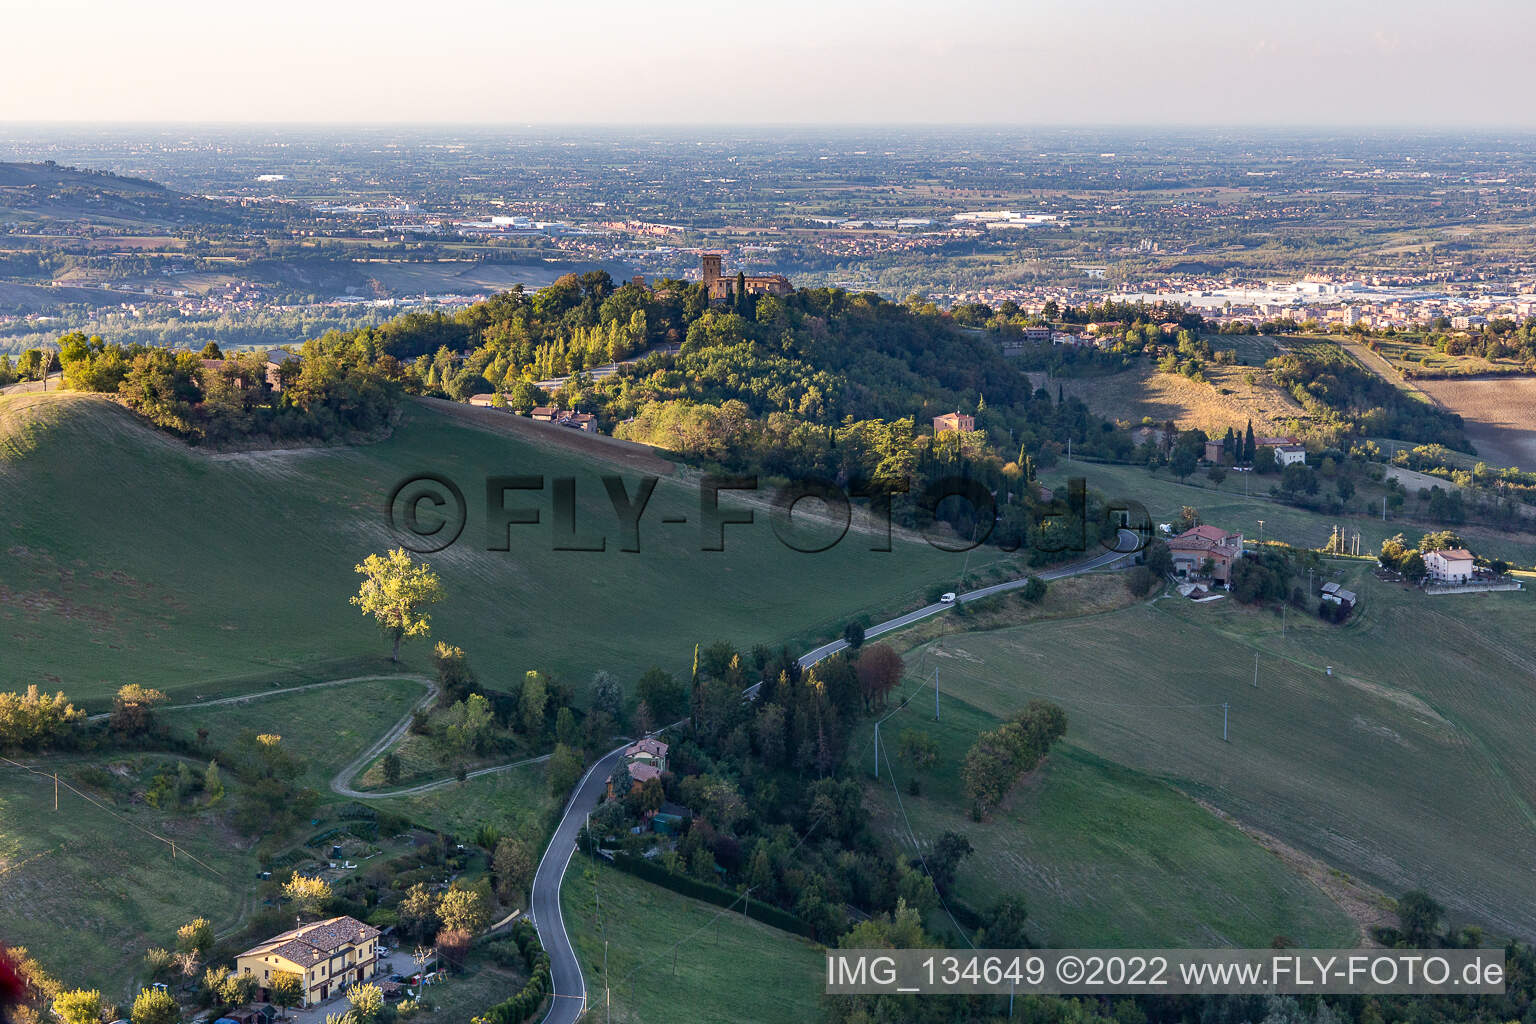 Luftbild von Schloss Montegibbio  Castello di Montegibbio in Sassuolo im Bundesland Modena, Italien